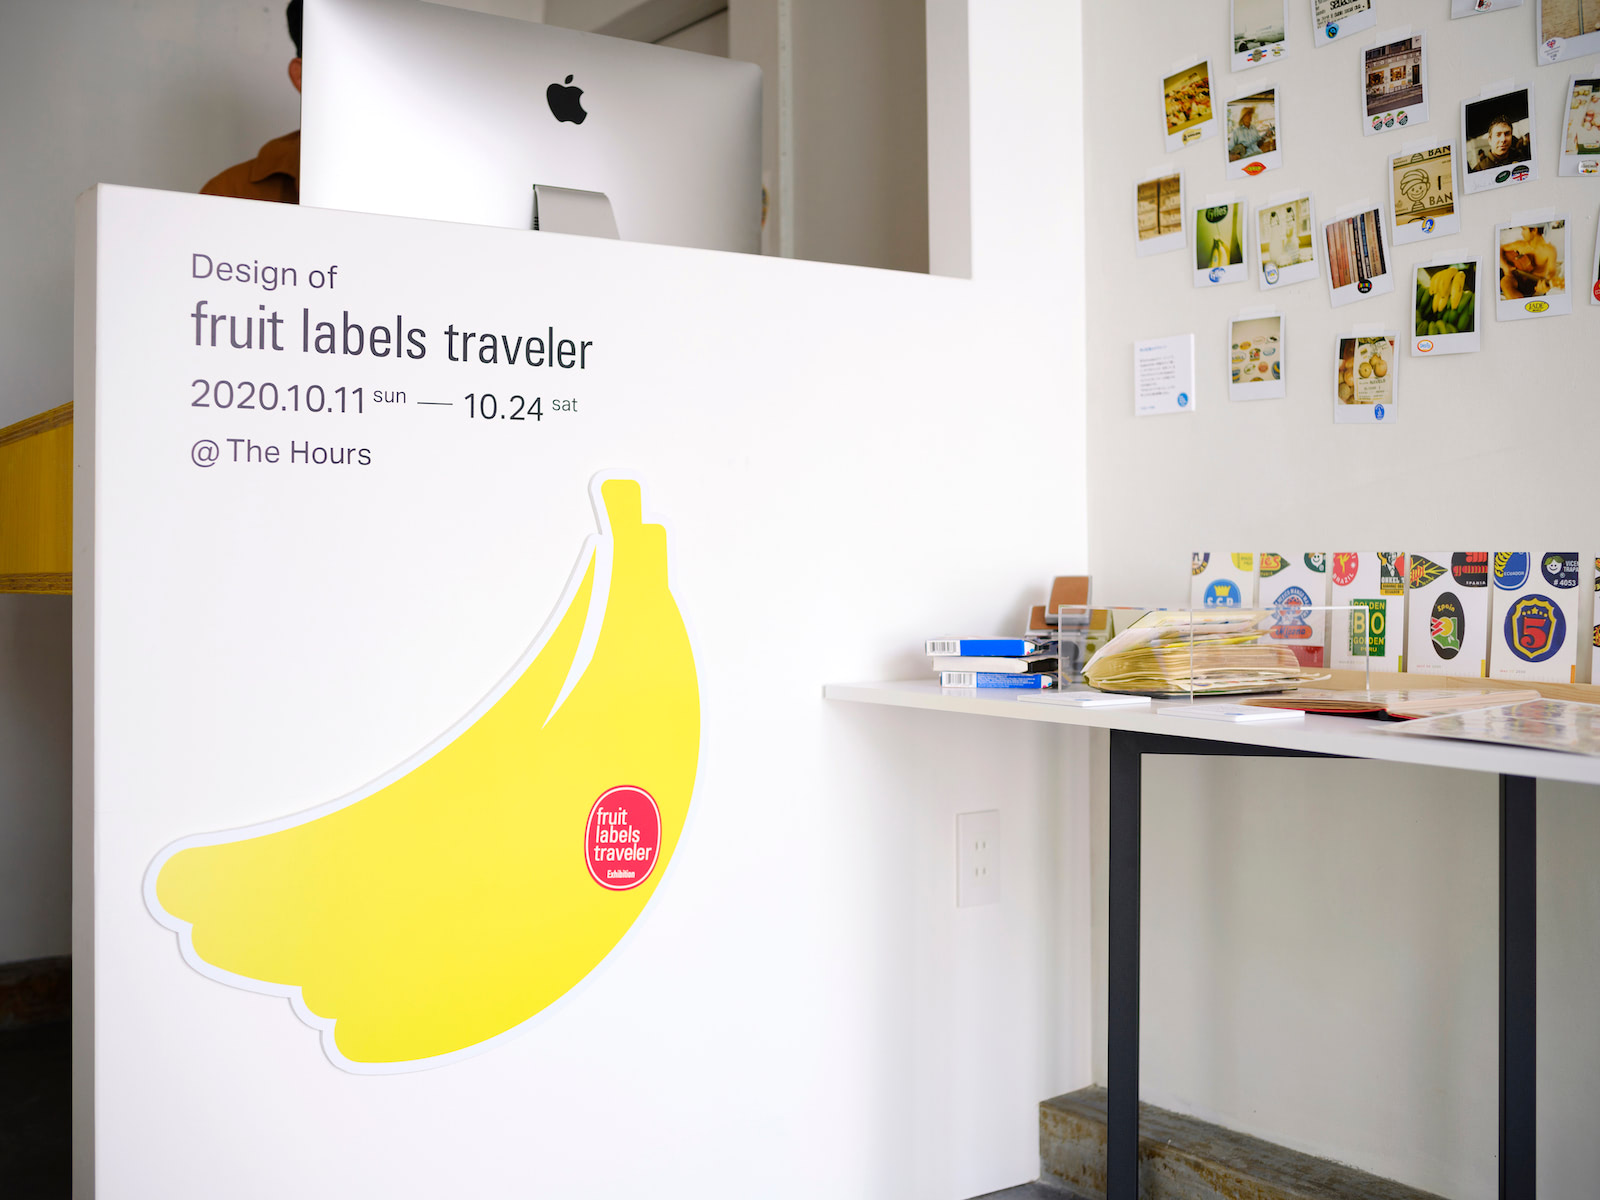 Design of fruit labels traveler / 旅するフルーツシールのデザイン展